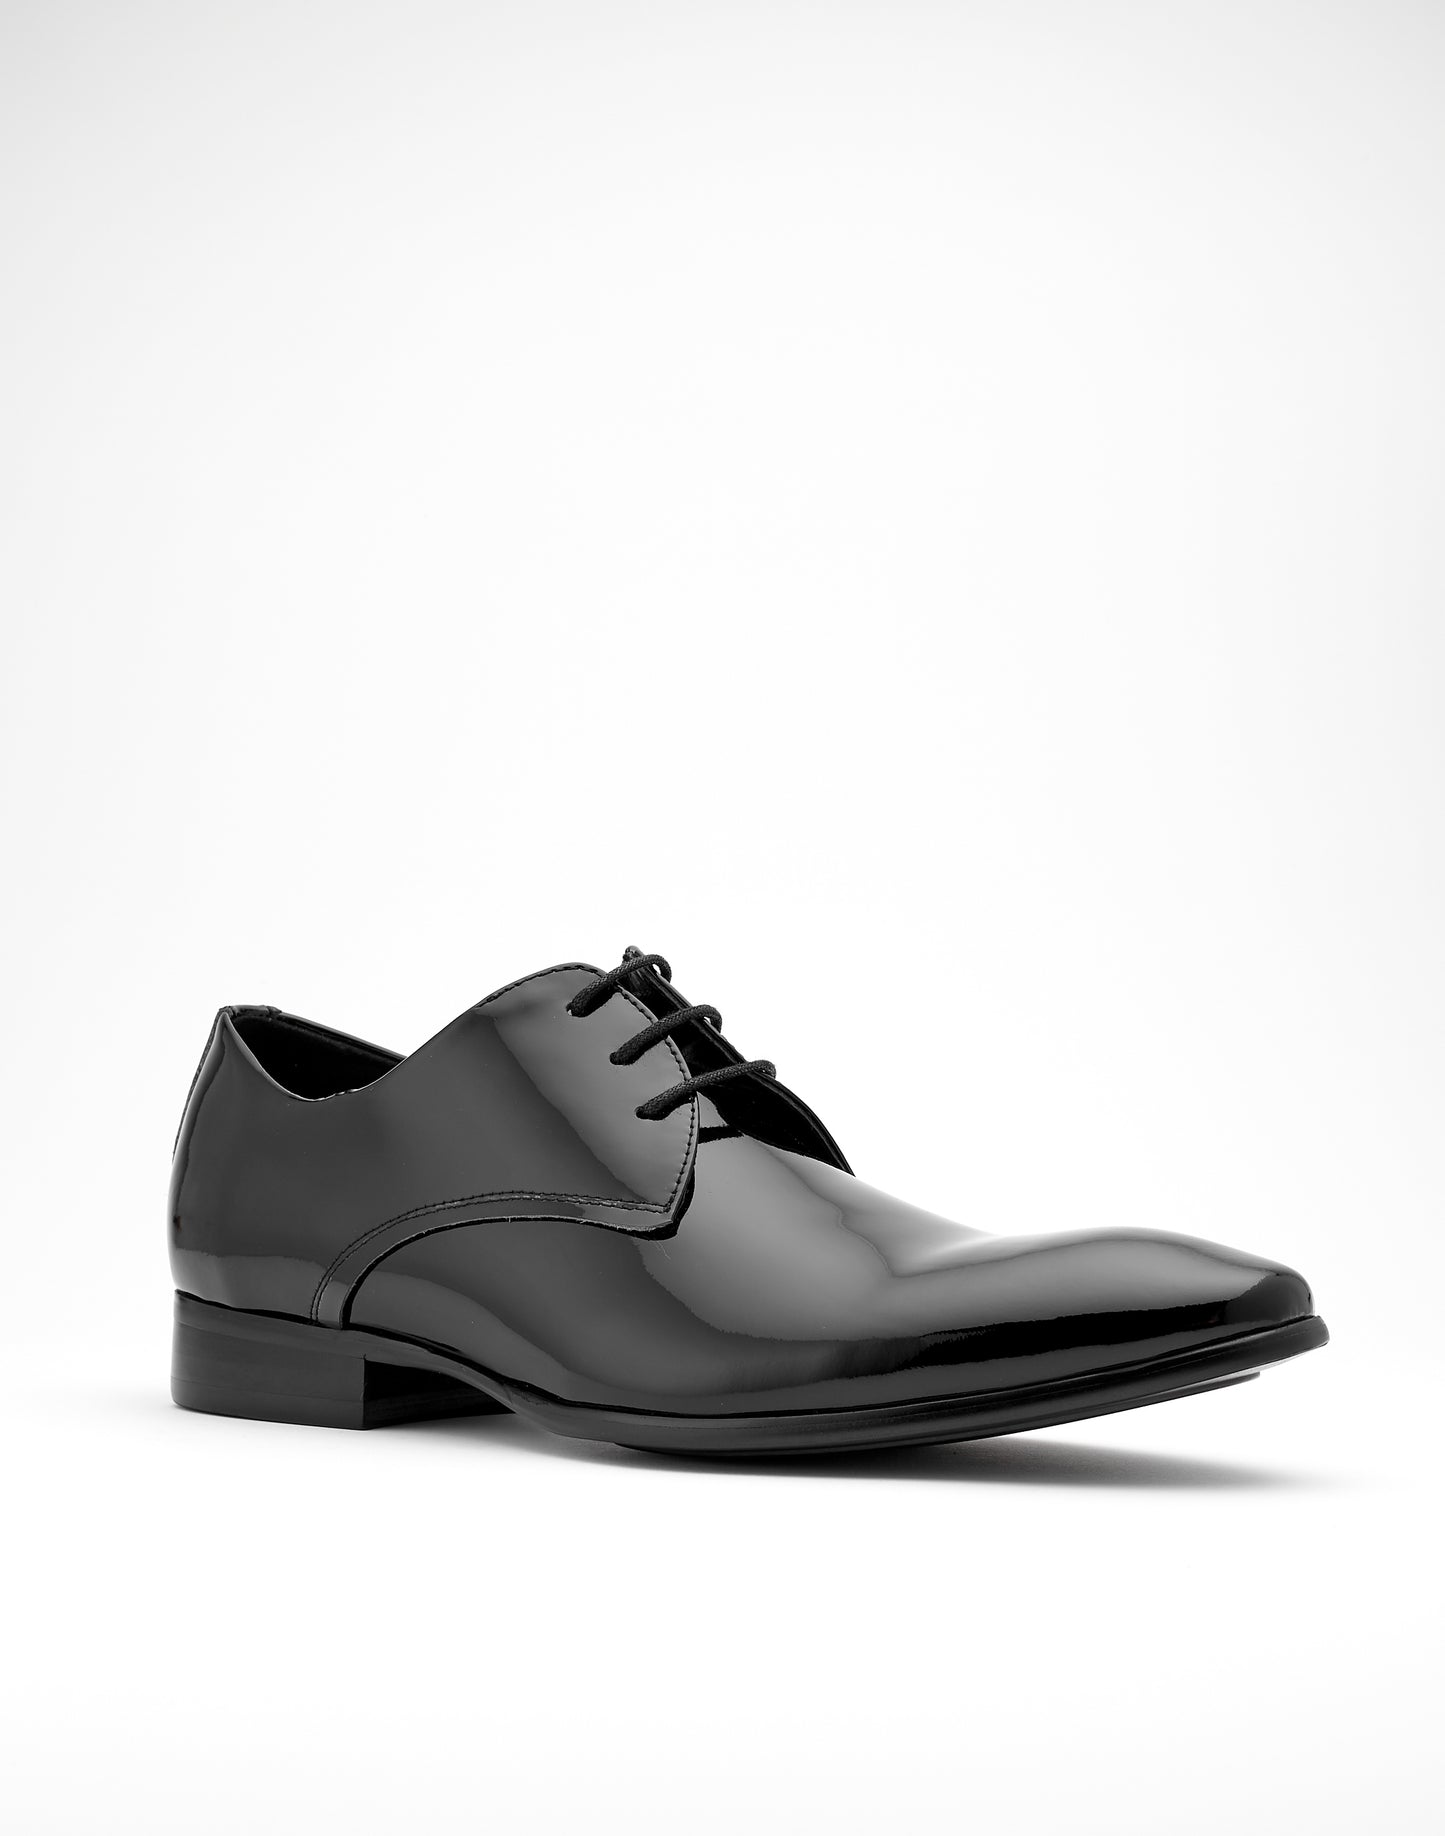 Jadon Shoe Patent Black